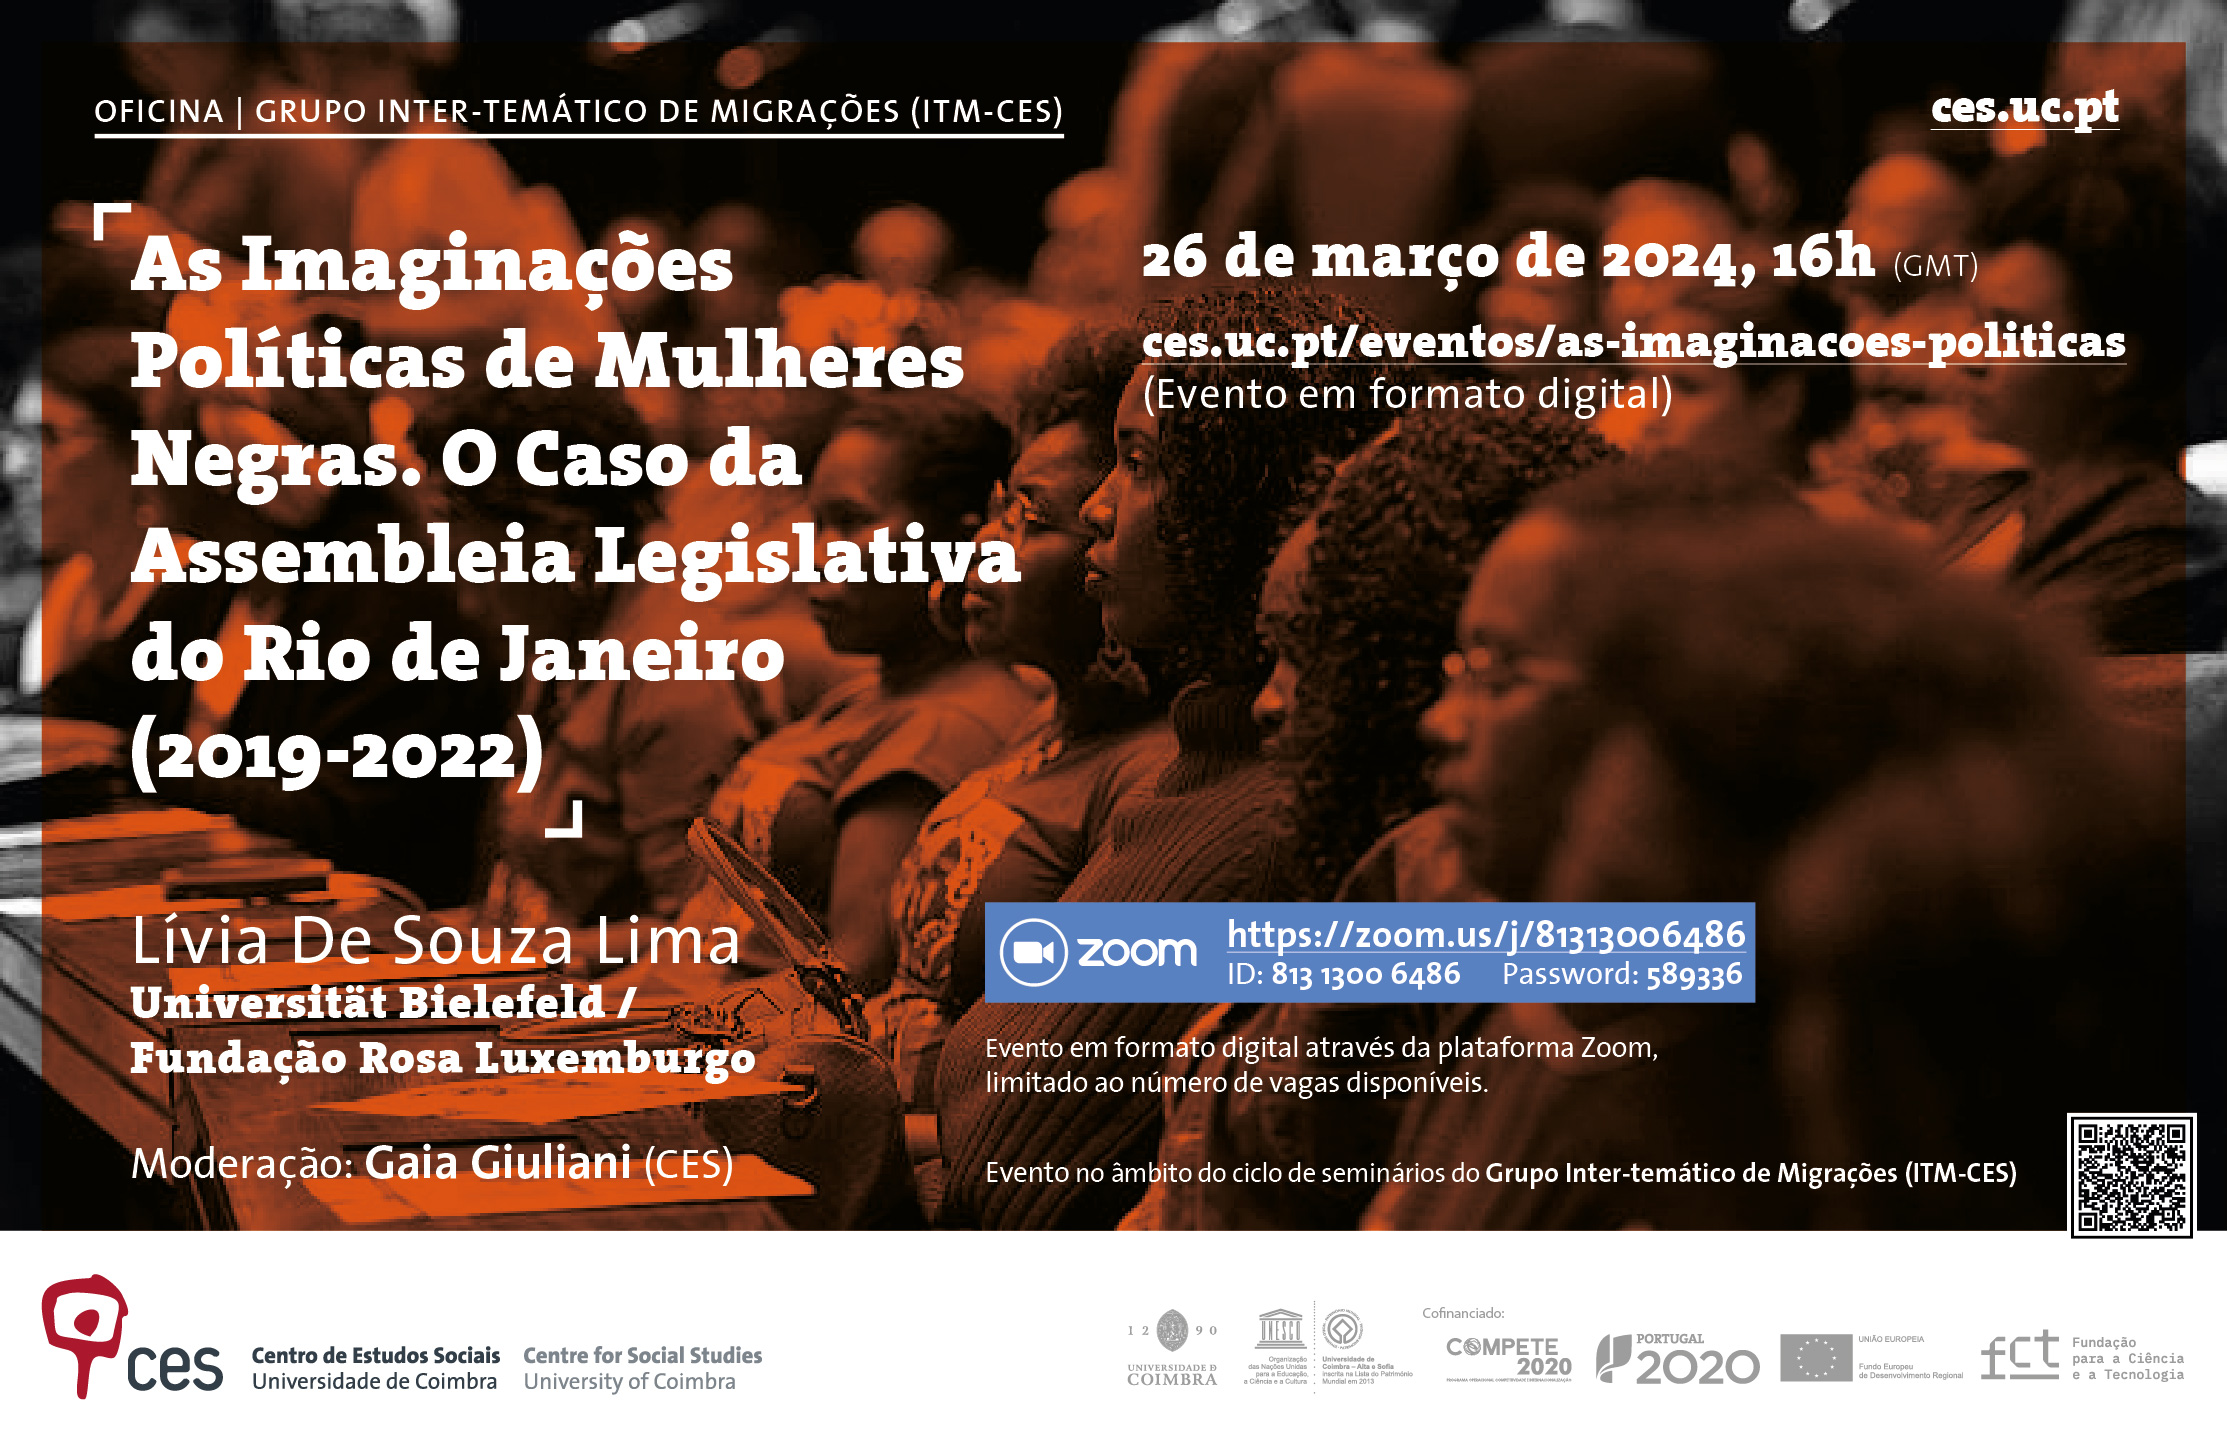 Black Women Political Imaginations: The Case of Rio de Janeiro’s Legislative Assembly (2019-2022)<span id="edit_44485"><script>$(function() { $('#edit_44485').load( "/myces/user/editobj.php?tipo=evento&id=44485" ); });</script></span>